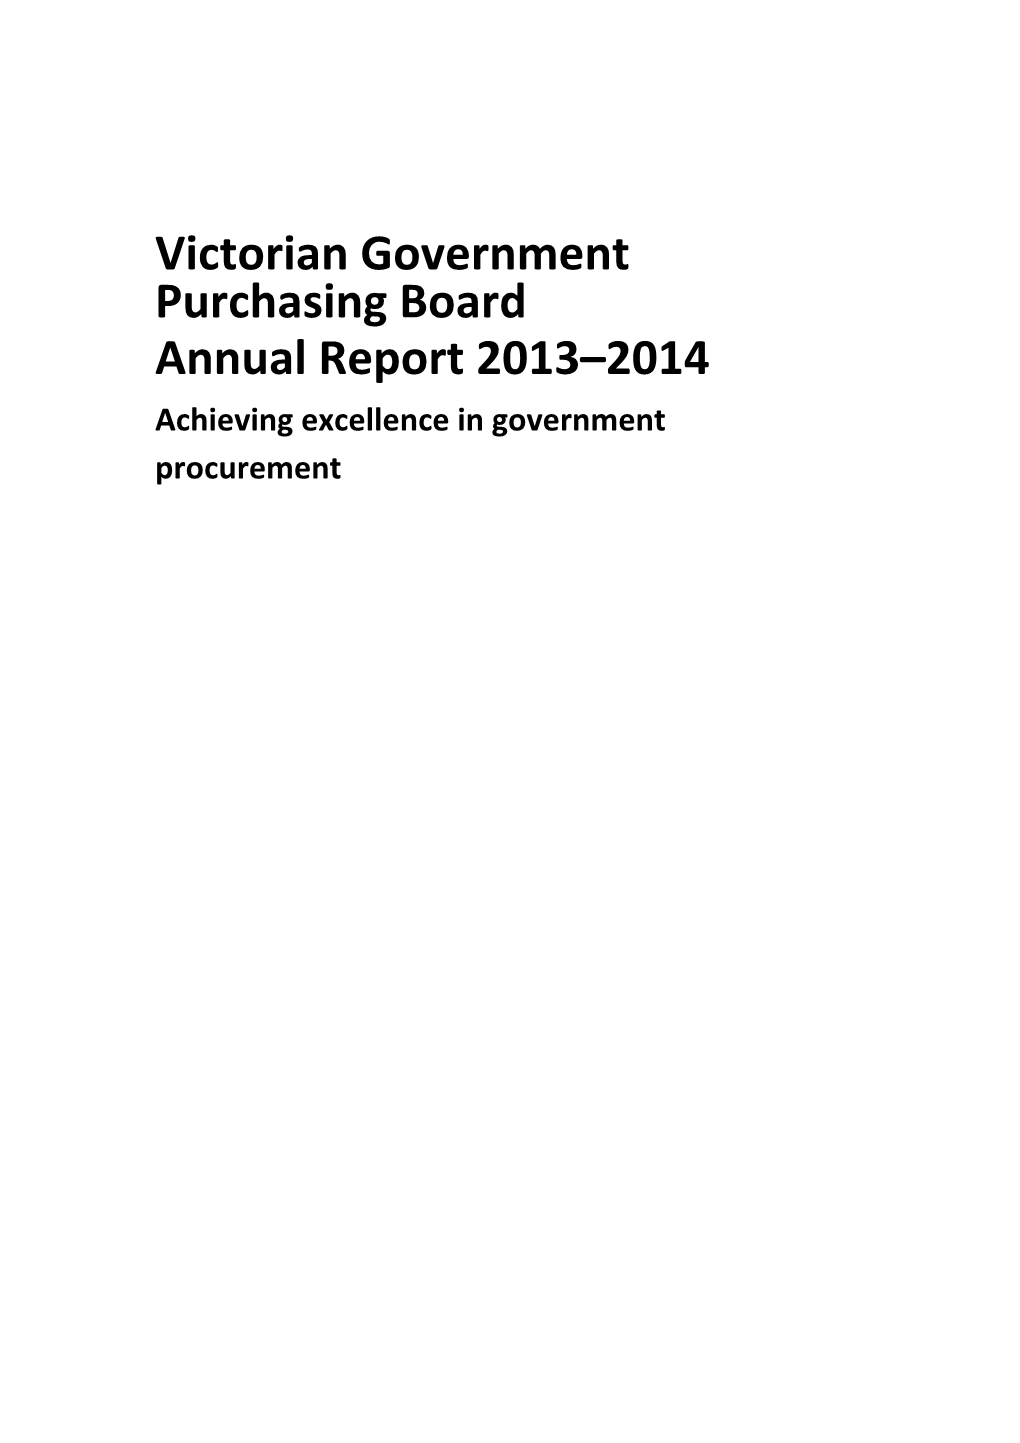 Victorian Government Purchasing Board